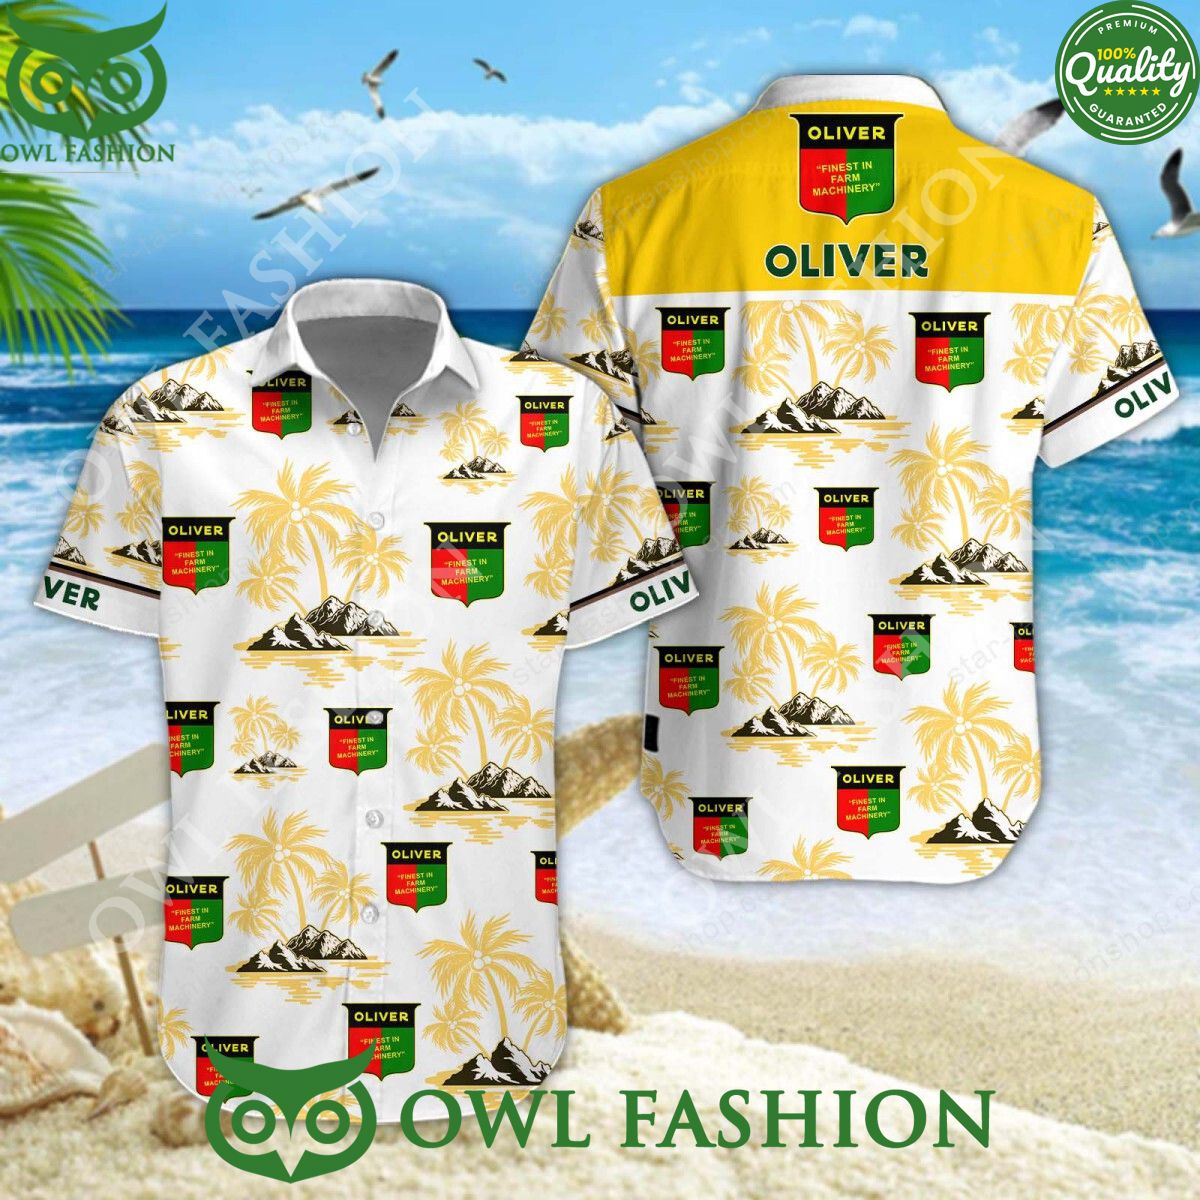 oliver tractor american farm equipment manufacturer hawaiian shirt and short 6 IwkqW.jpg